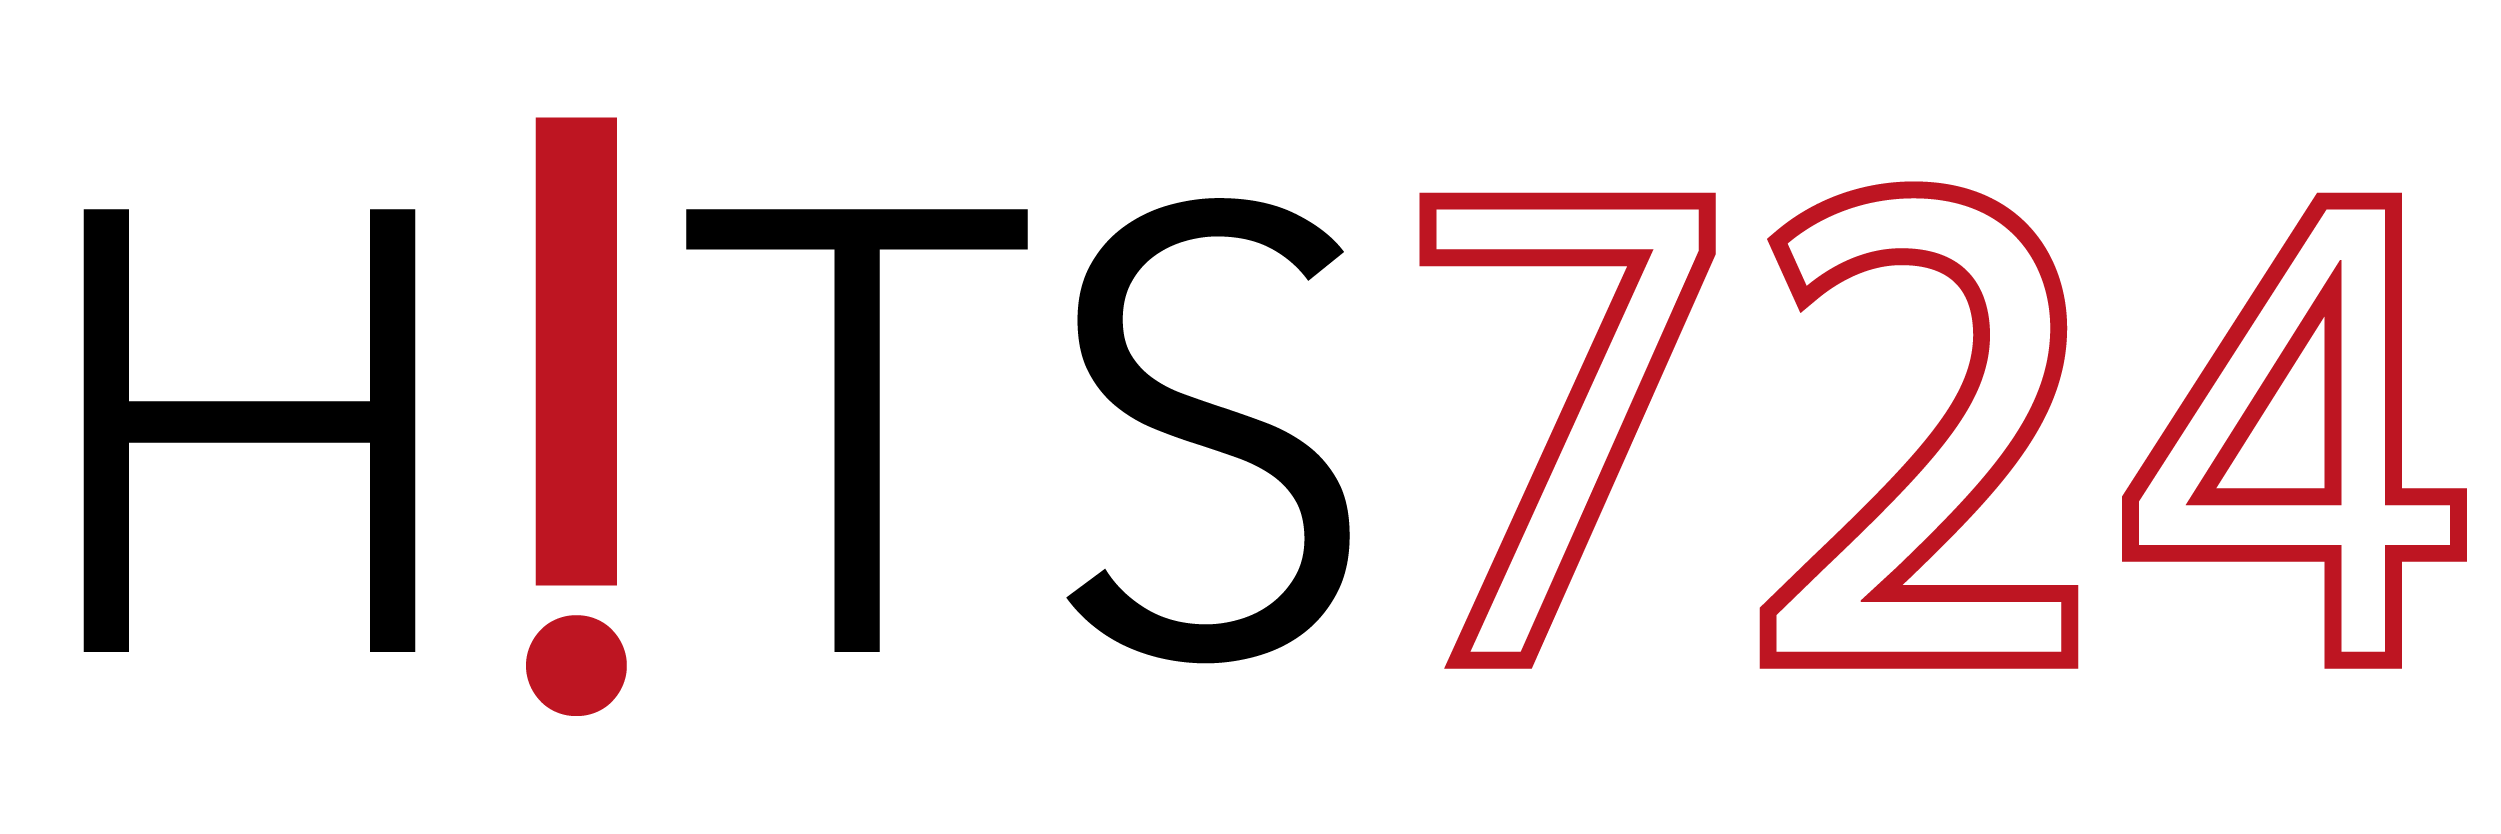 hits724-logo